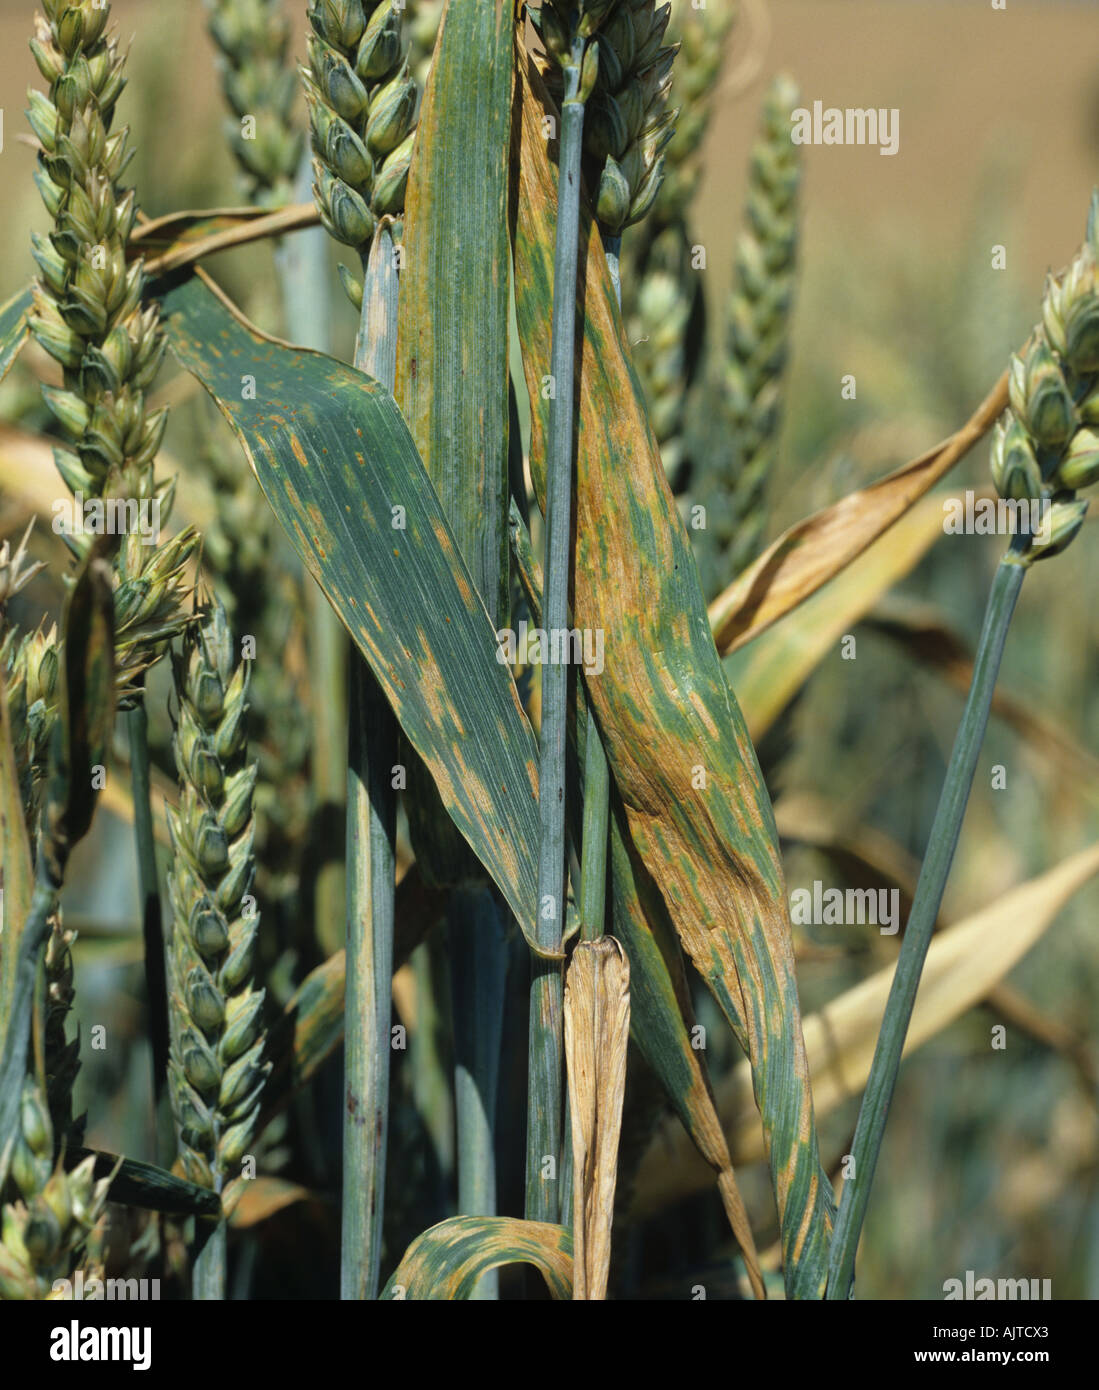 Septoria leaf spot Zymoeptoria tritici lesions on wheat flagleaves Stock Photo